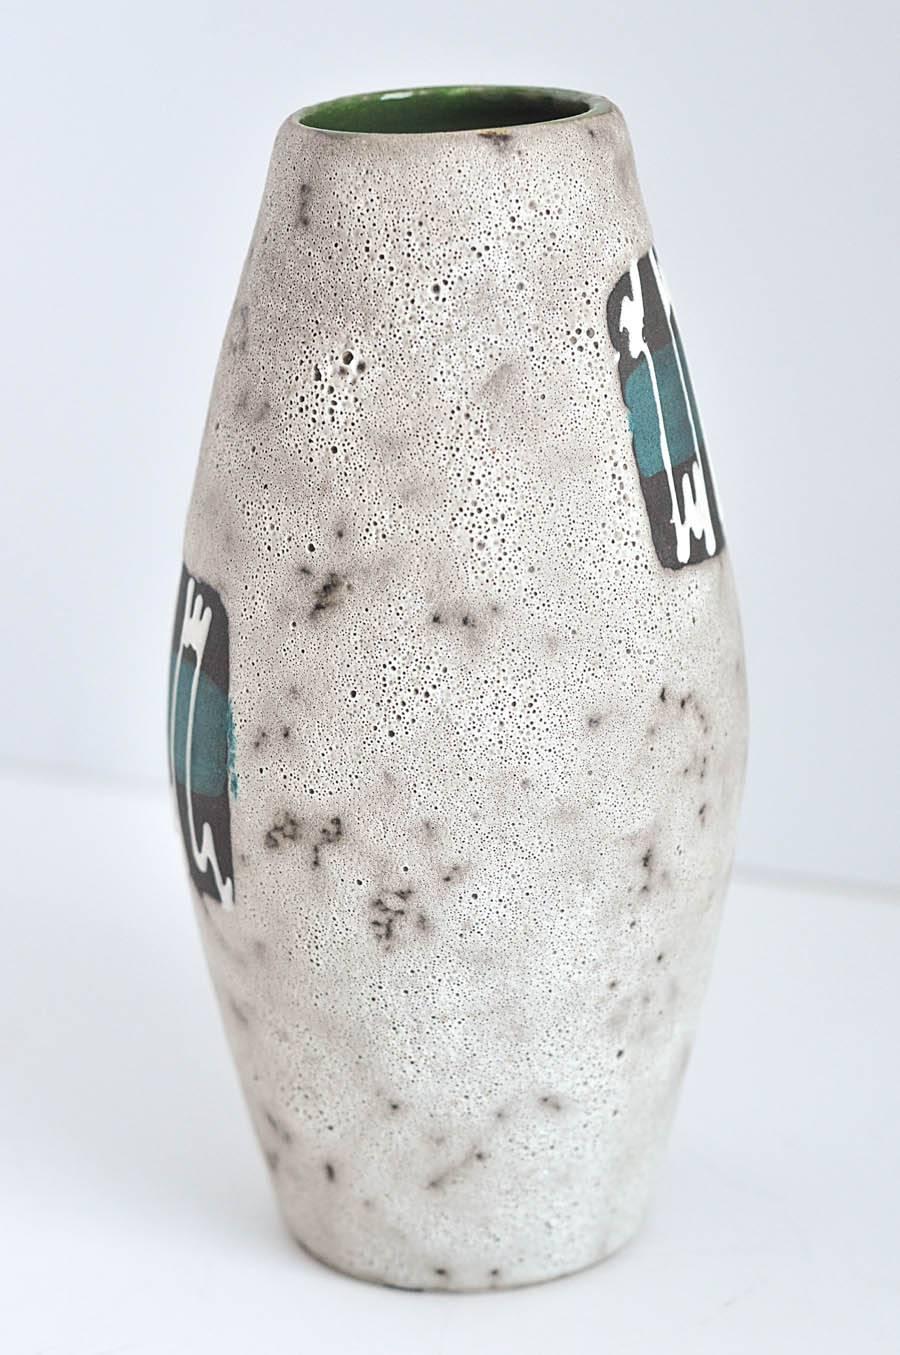 Brutalist 1970s West German Ceramic Vase by Scheurich Keramik Co. For Sale